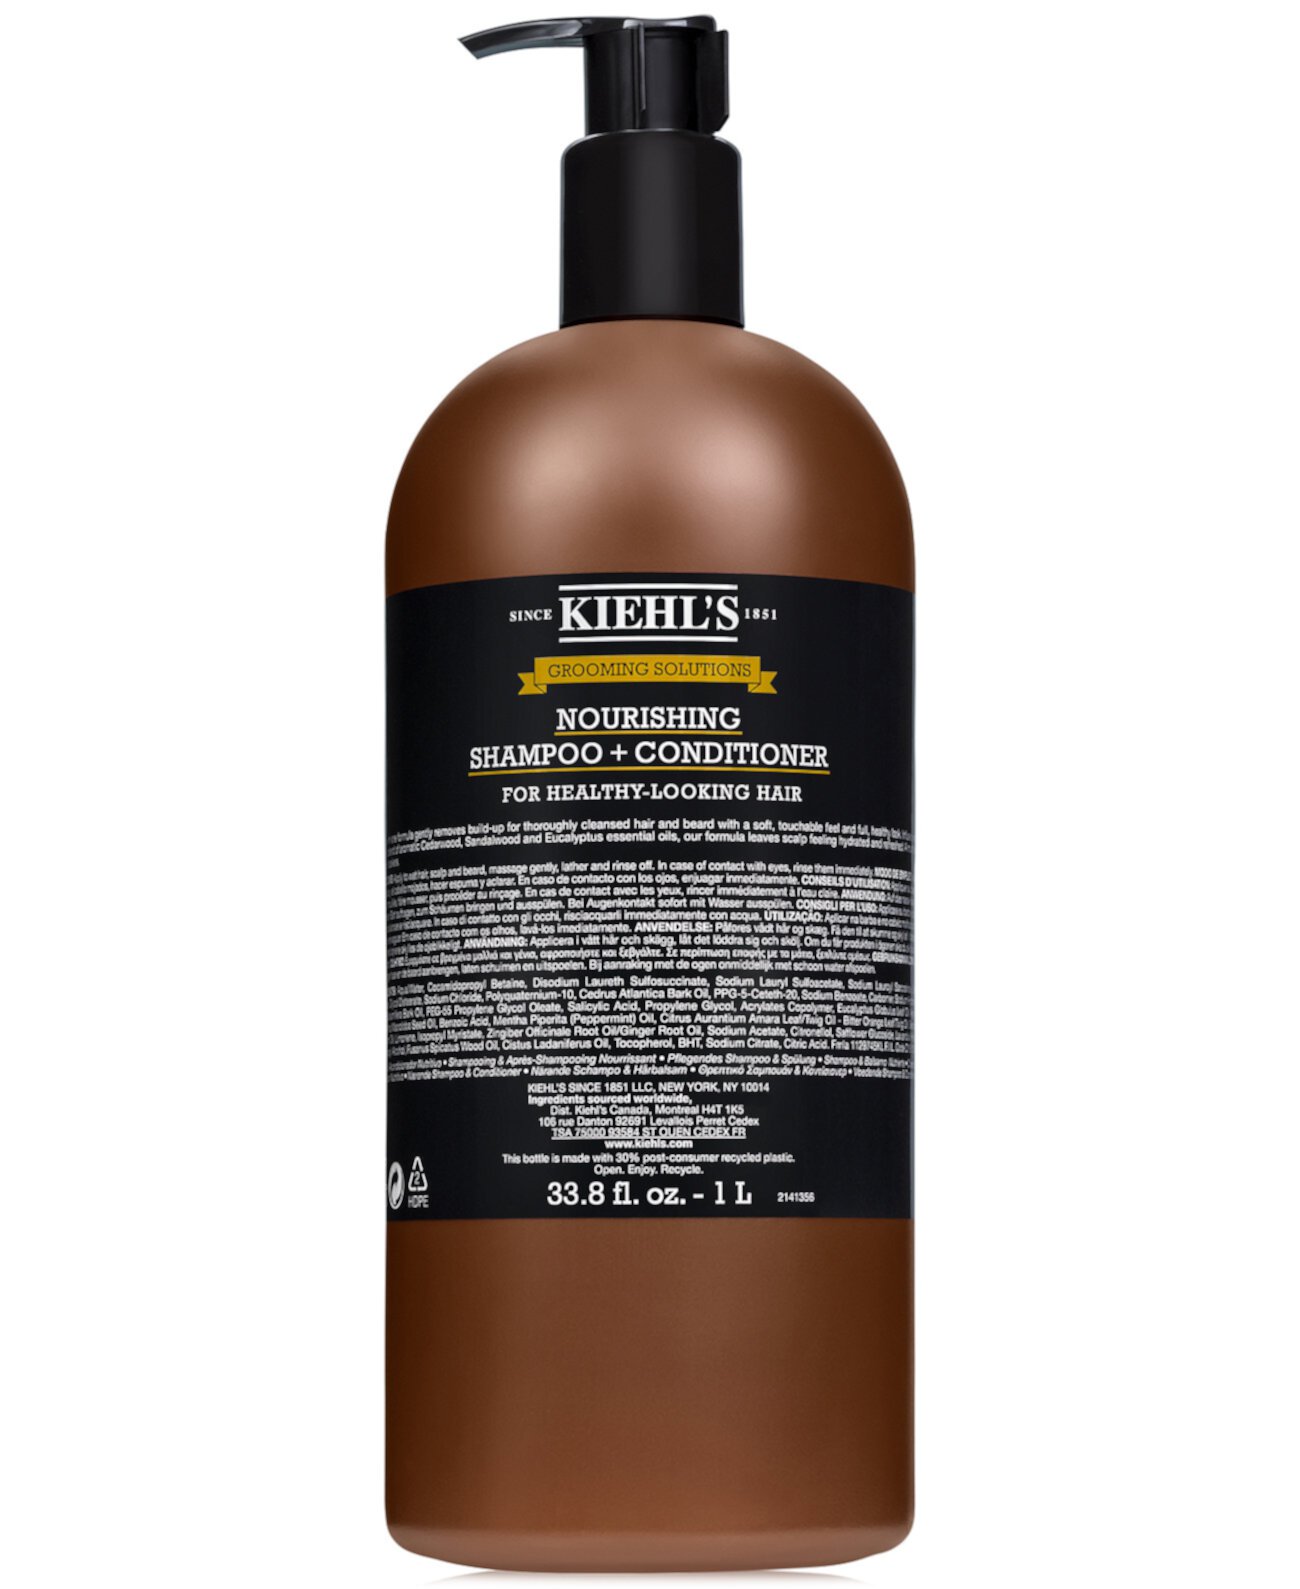 Grooming Solutions Питательный шампунь + кондиционер, 33,8 эт. унция Kiehl's Since 1851